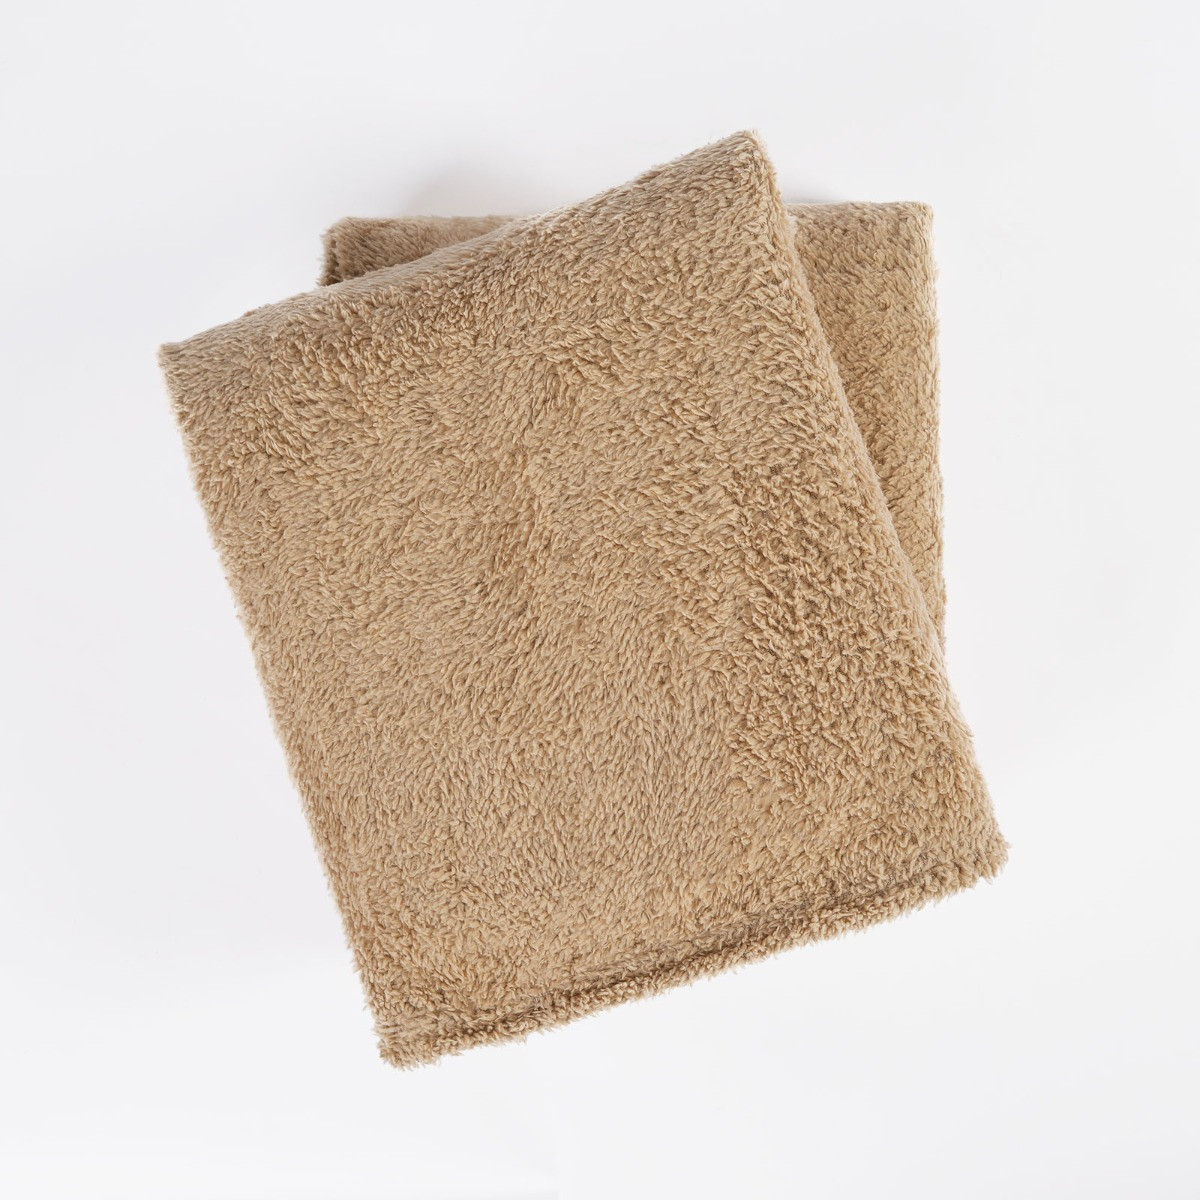 Brentfords by OHS Teddy Fleece Blanket Throw, Natural Latte Beige - 125 x 150cm>